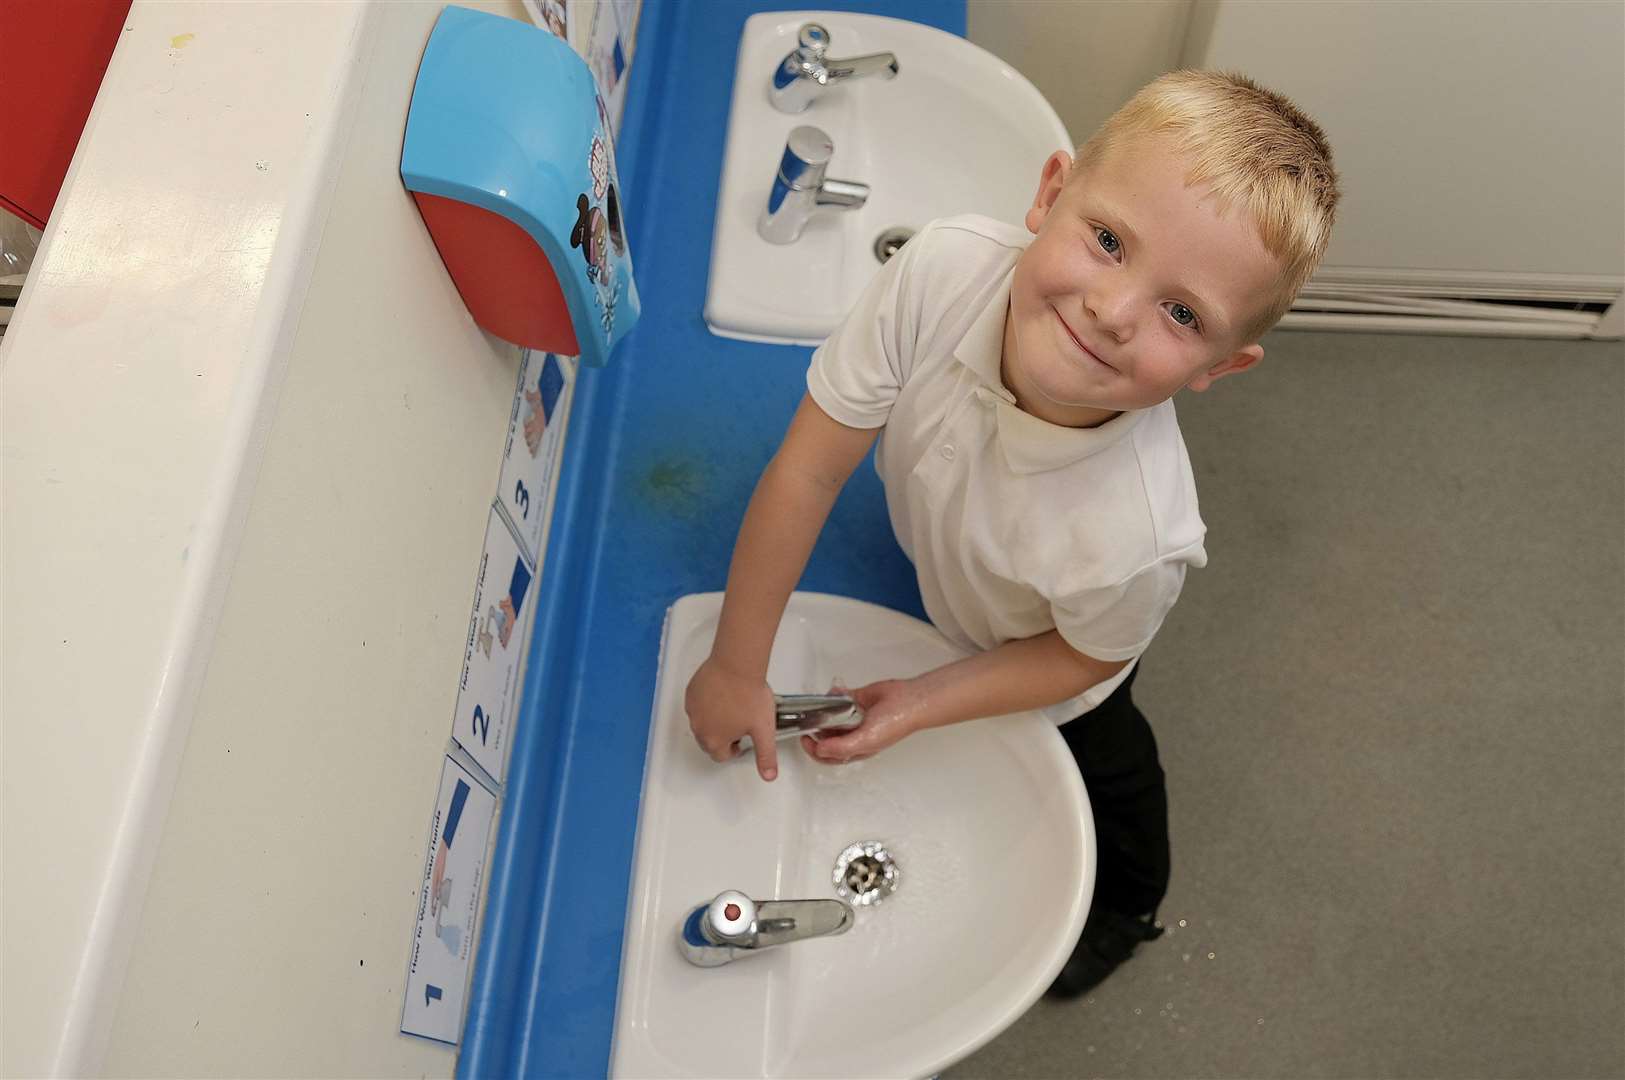 SAFETY FIRST: Children will be encouraged to wash their hands